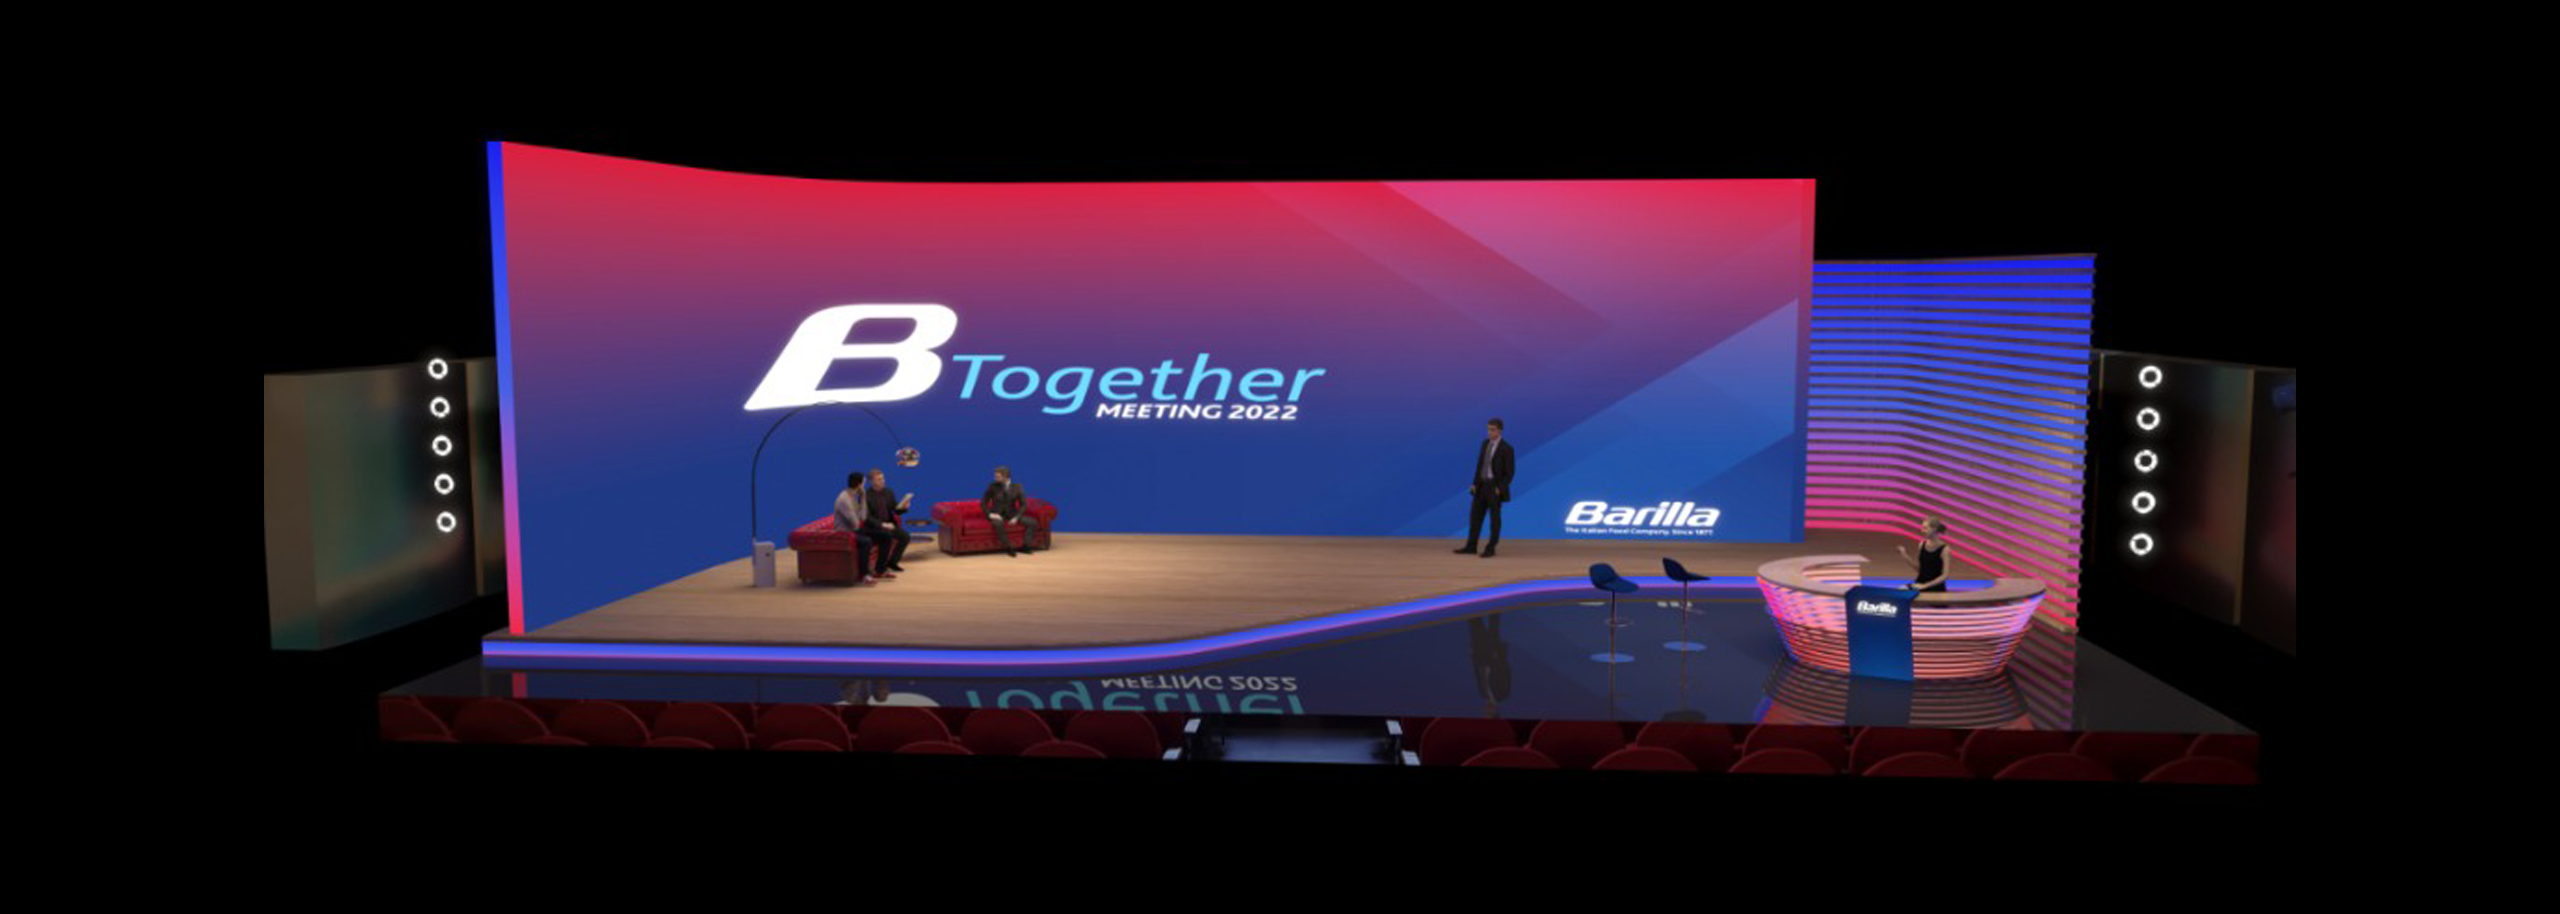 B Together Barilla Meeting 2022 palco